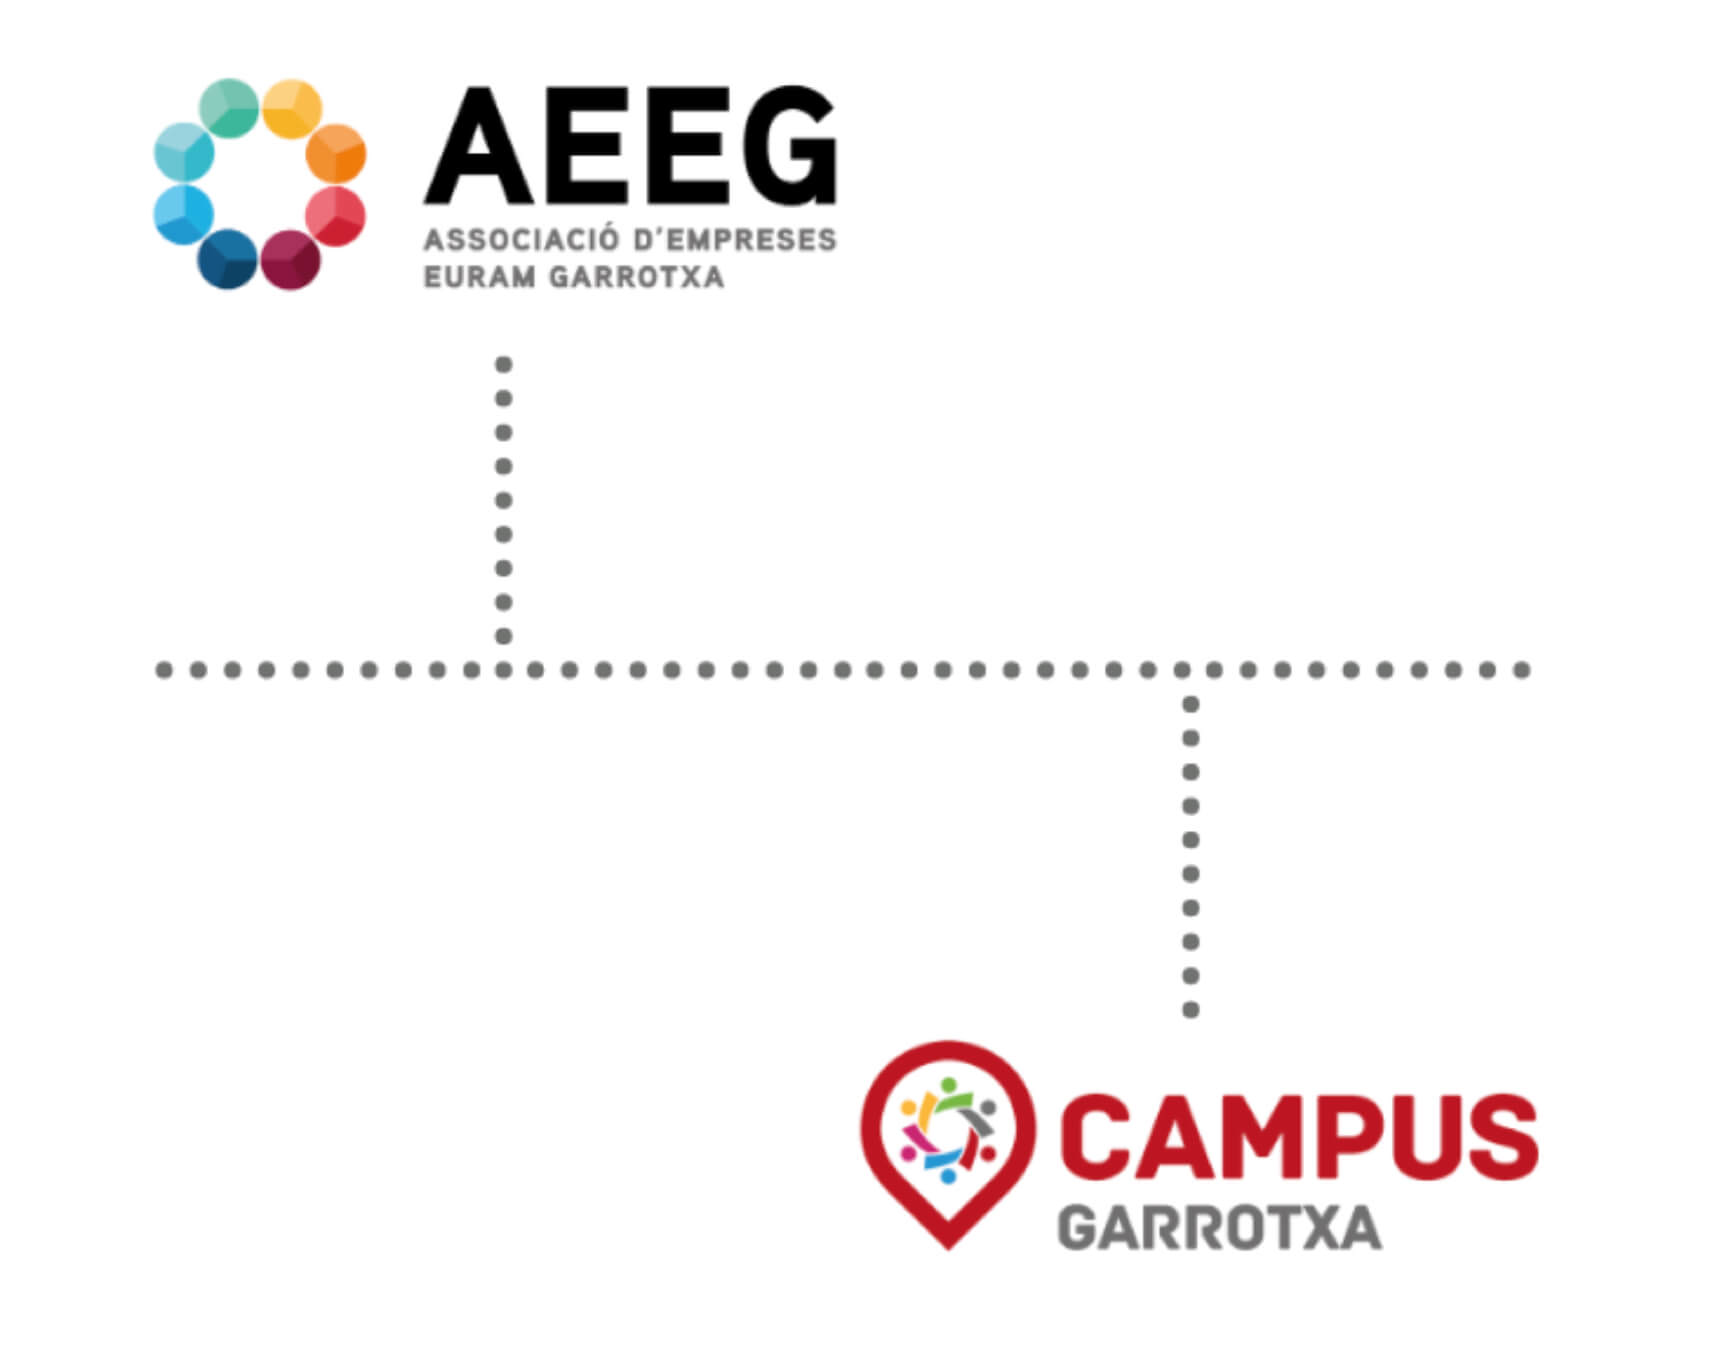 AEEG to Campus Garrotxa